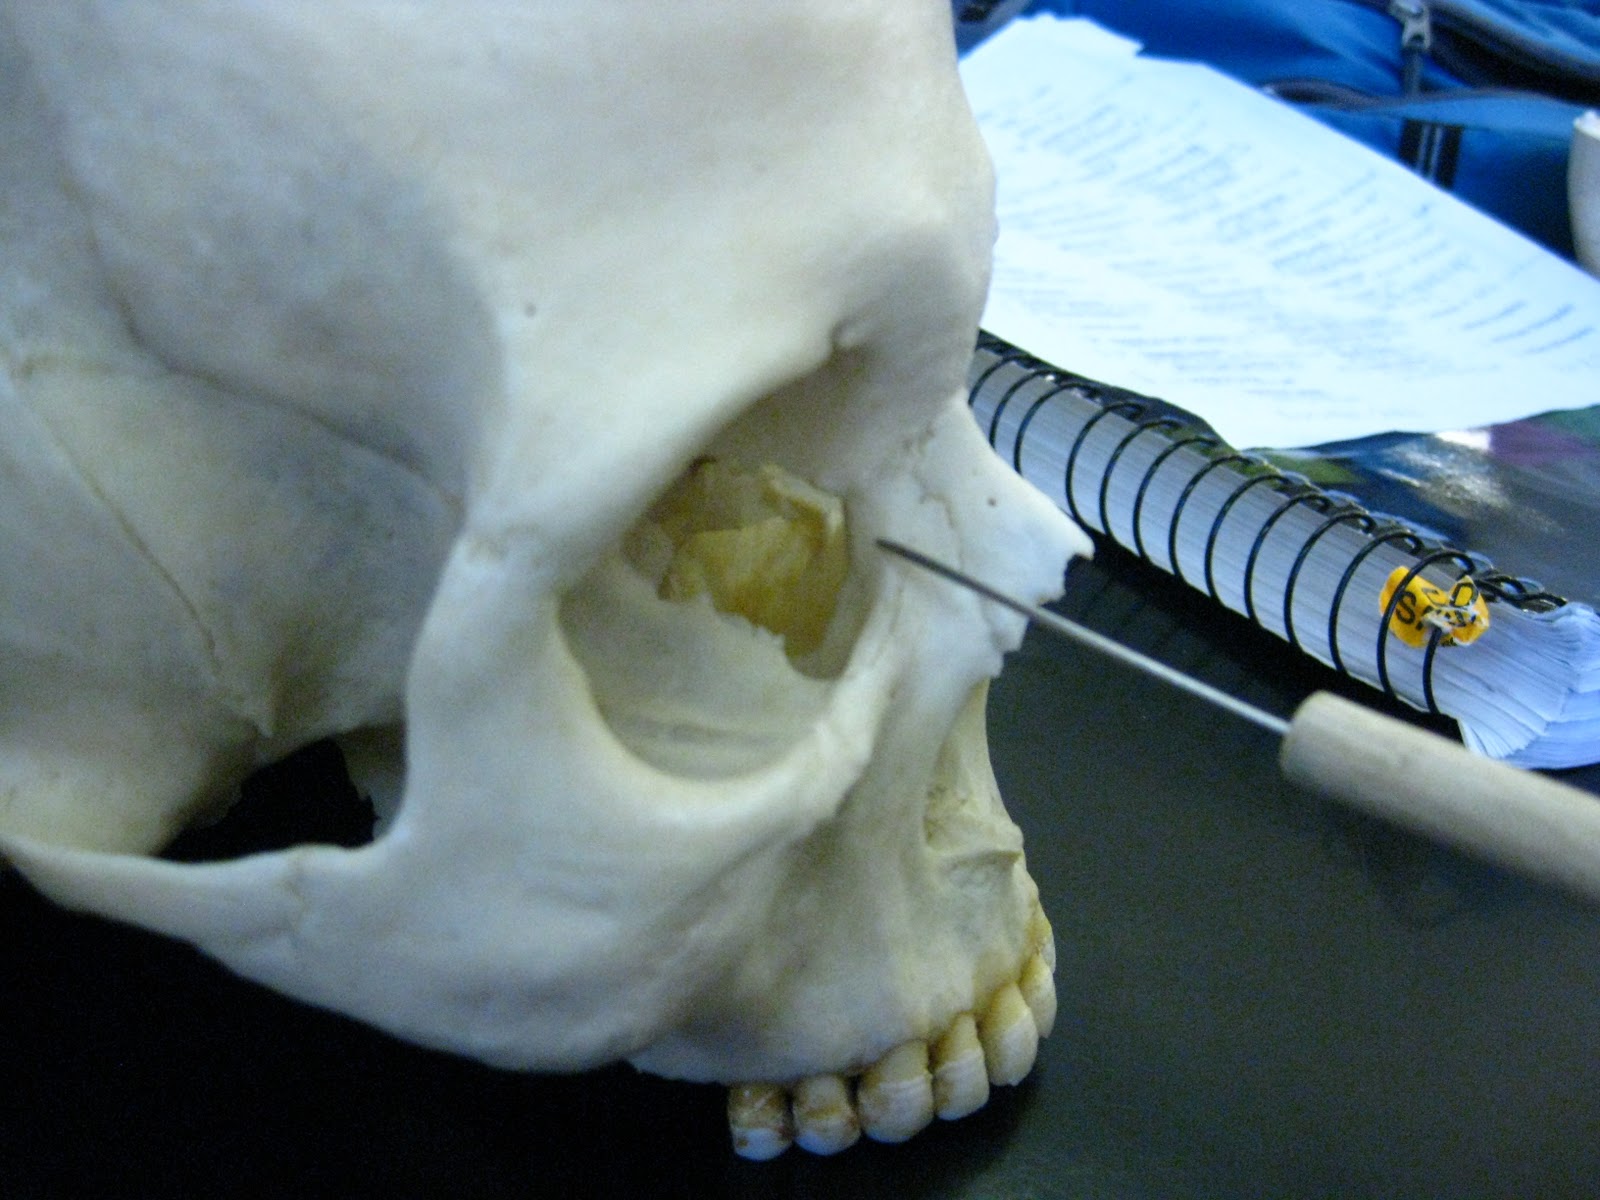 Boned: Human Skull - lacrimal bone